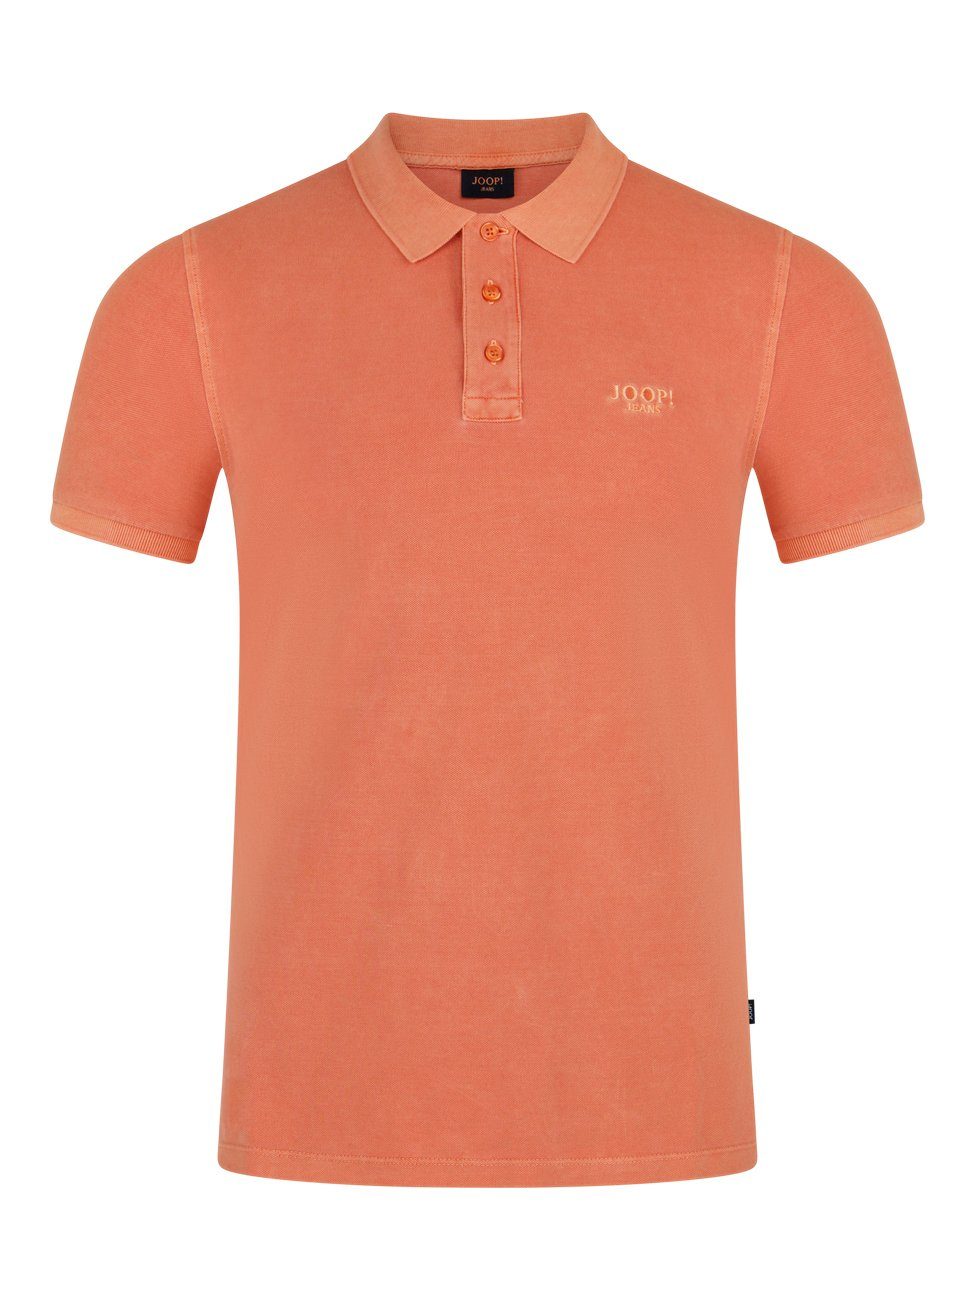 Poloshirt (1-tlg) AMBROSIO Orange Baumwolle Open 875 Joop! aus